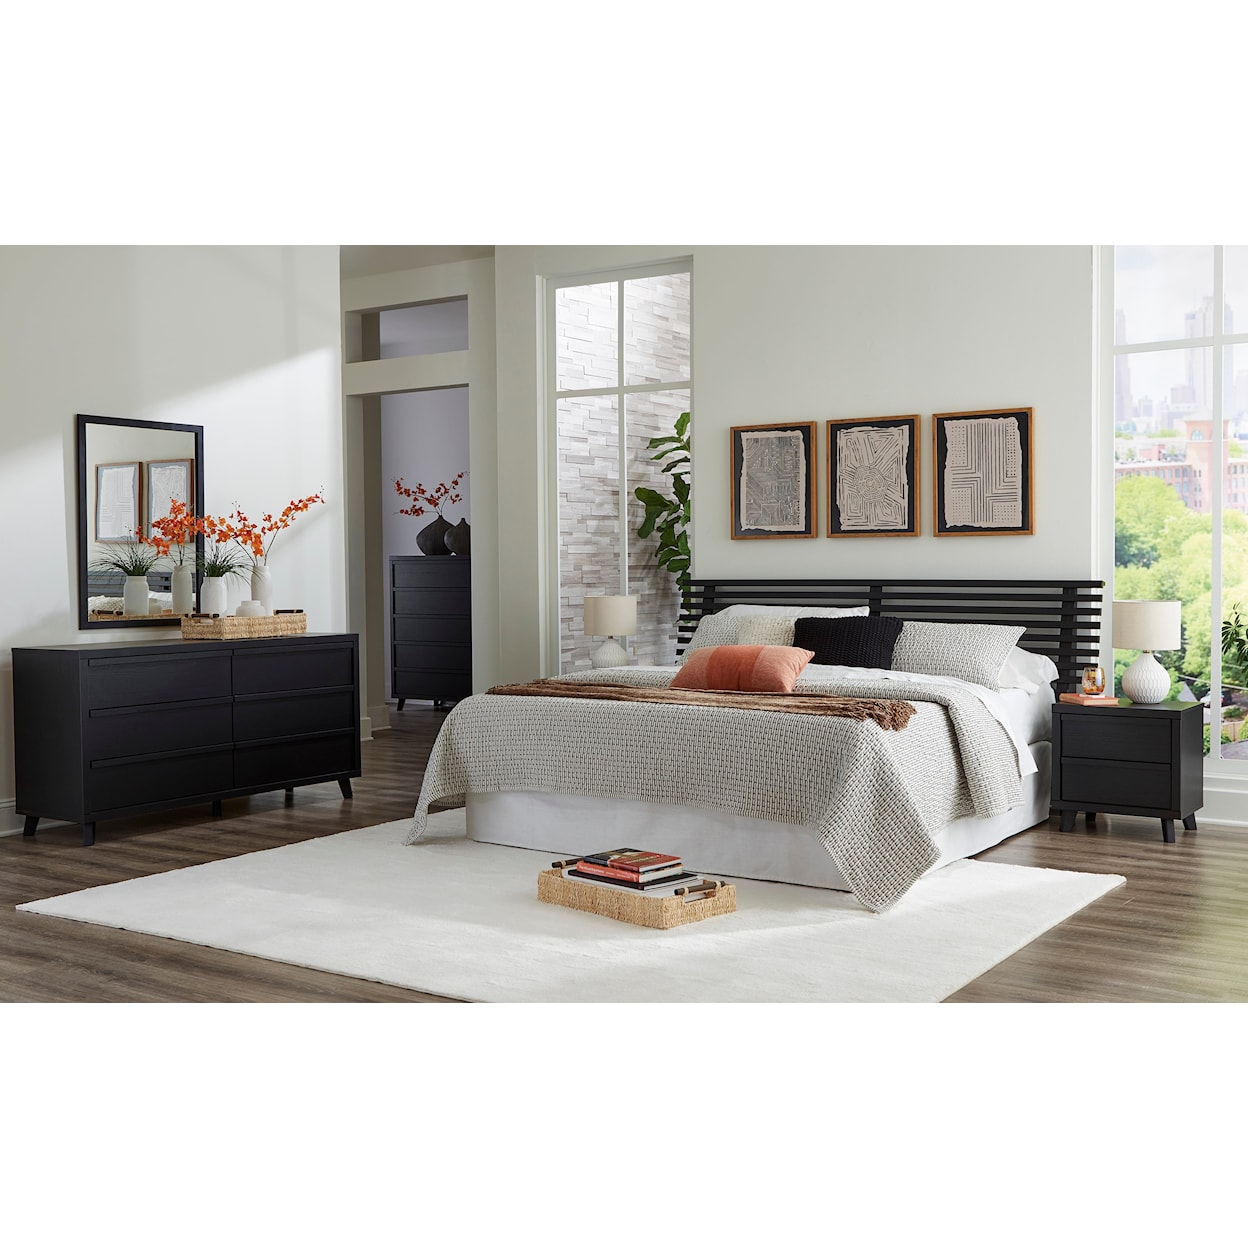 Ashley Furniture Signature Design Danziar King Bedroom Set